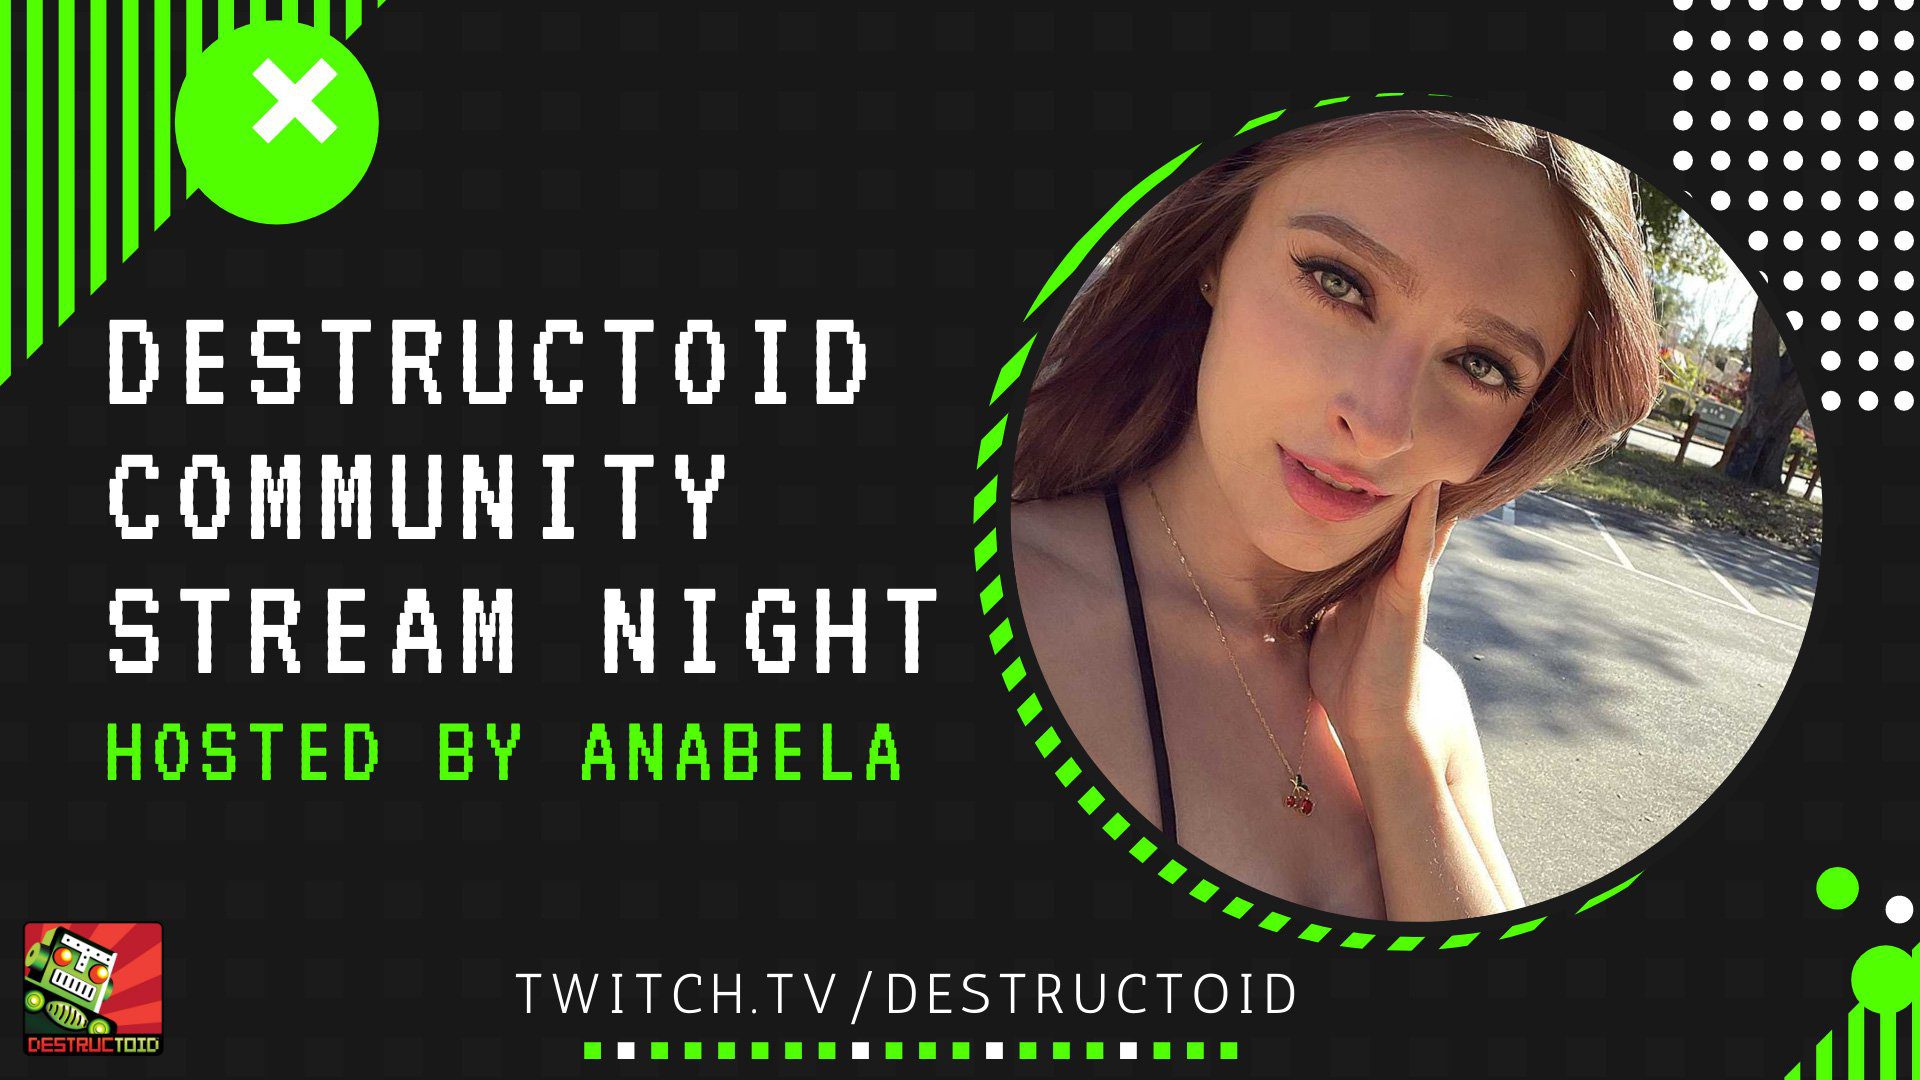 Destructoid Twitch community stream night with Anabela